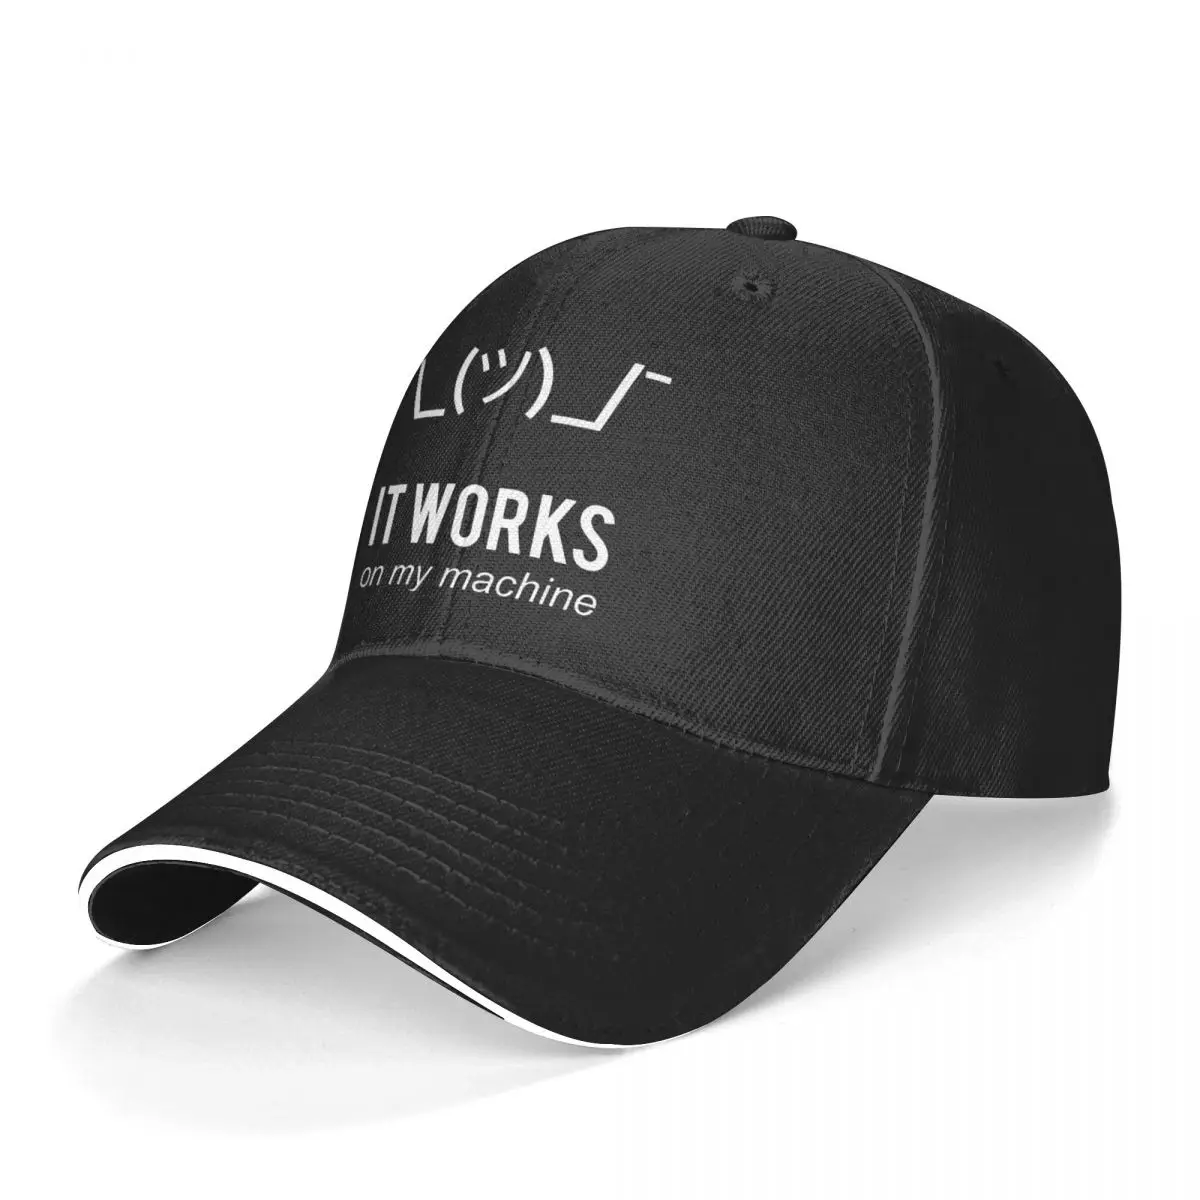 Programmer Baseball Cap Shrug it works on my machine Skate Sun-Proof Hip Hop Hats Fitted Printed Men Snapback Cap